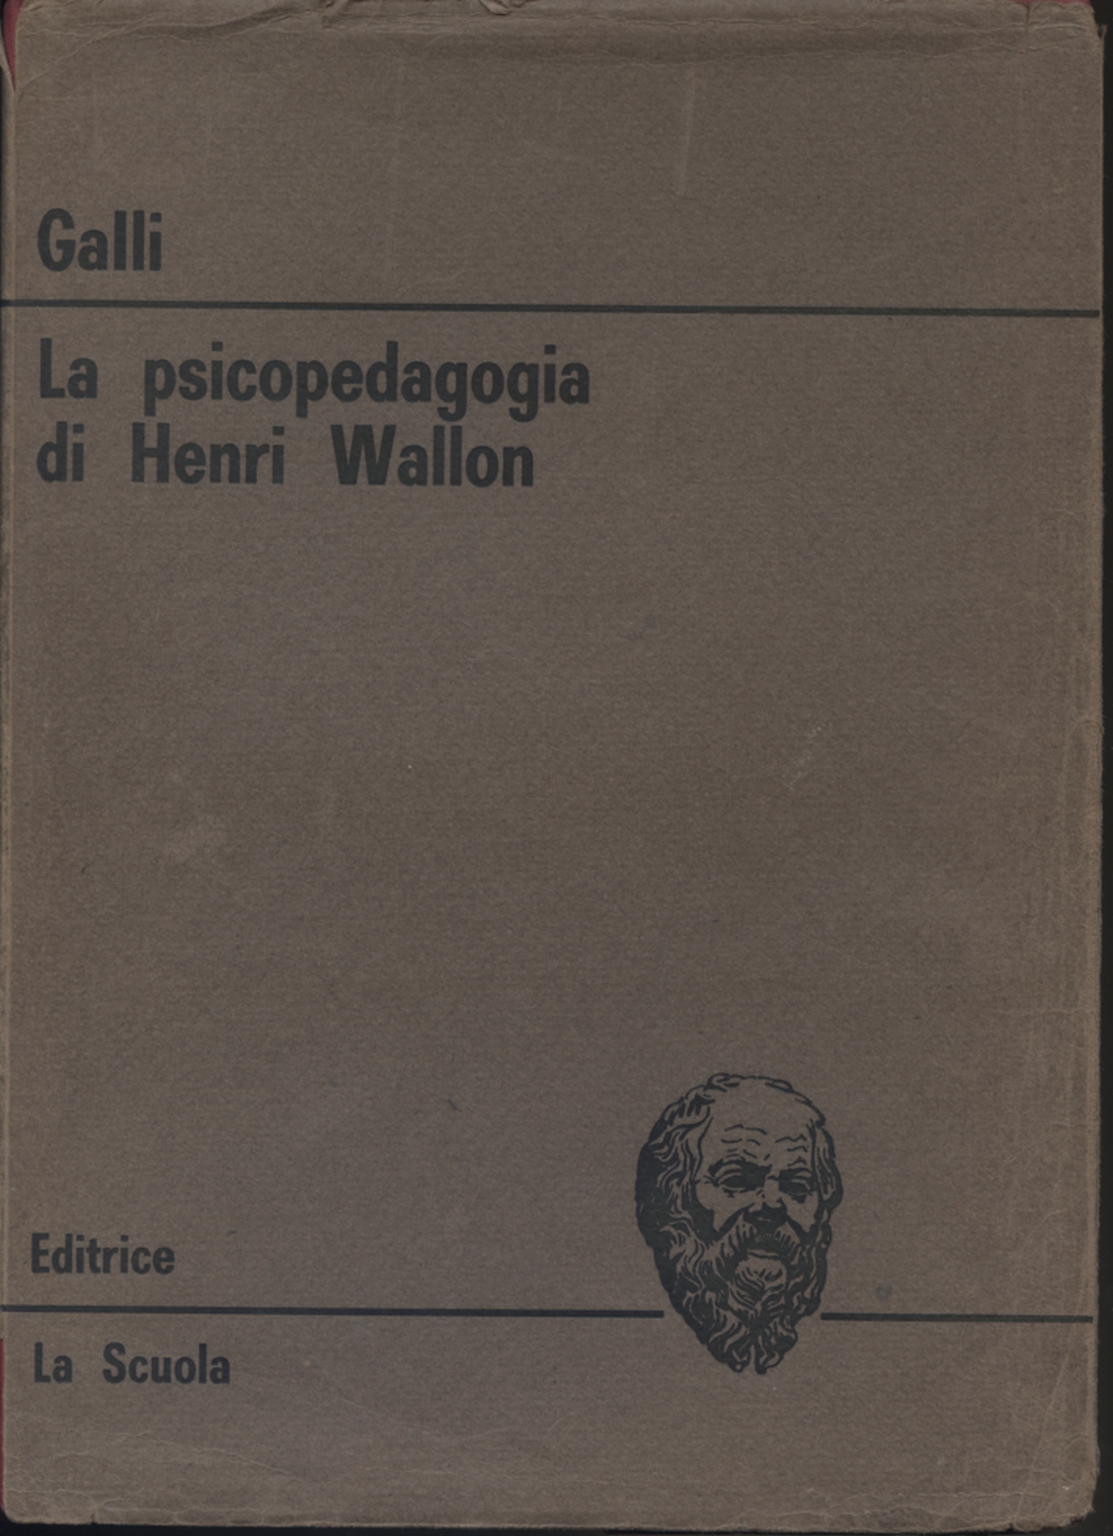 Die psycho-Henri Wallon, Norbert Galli